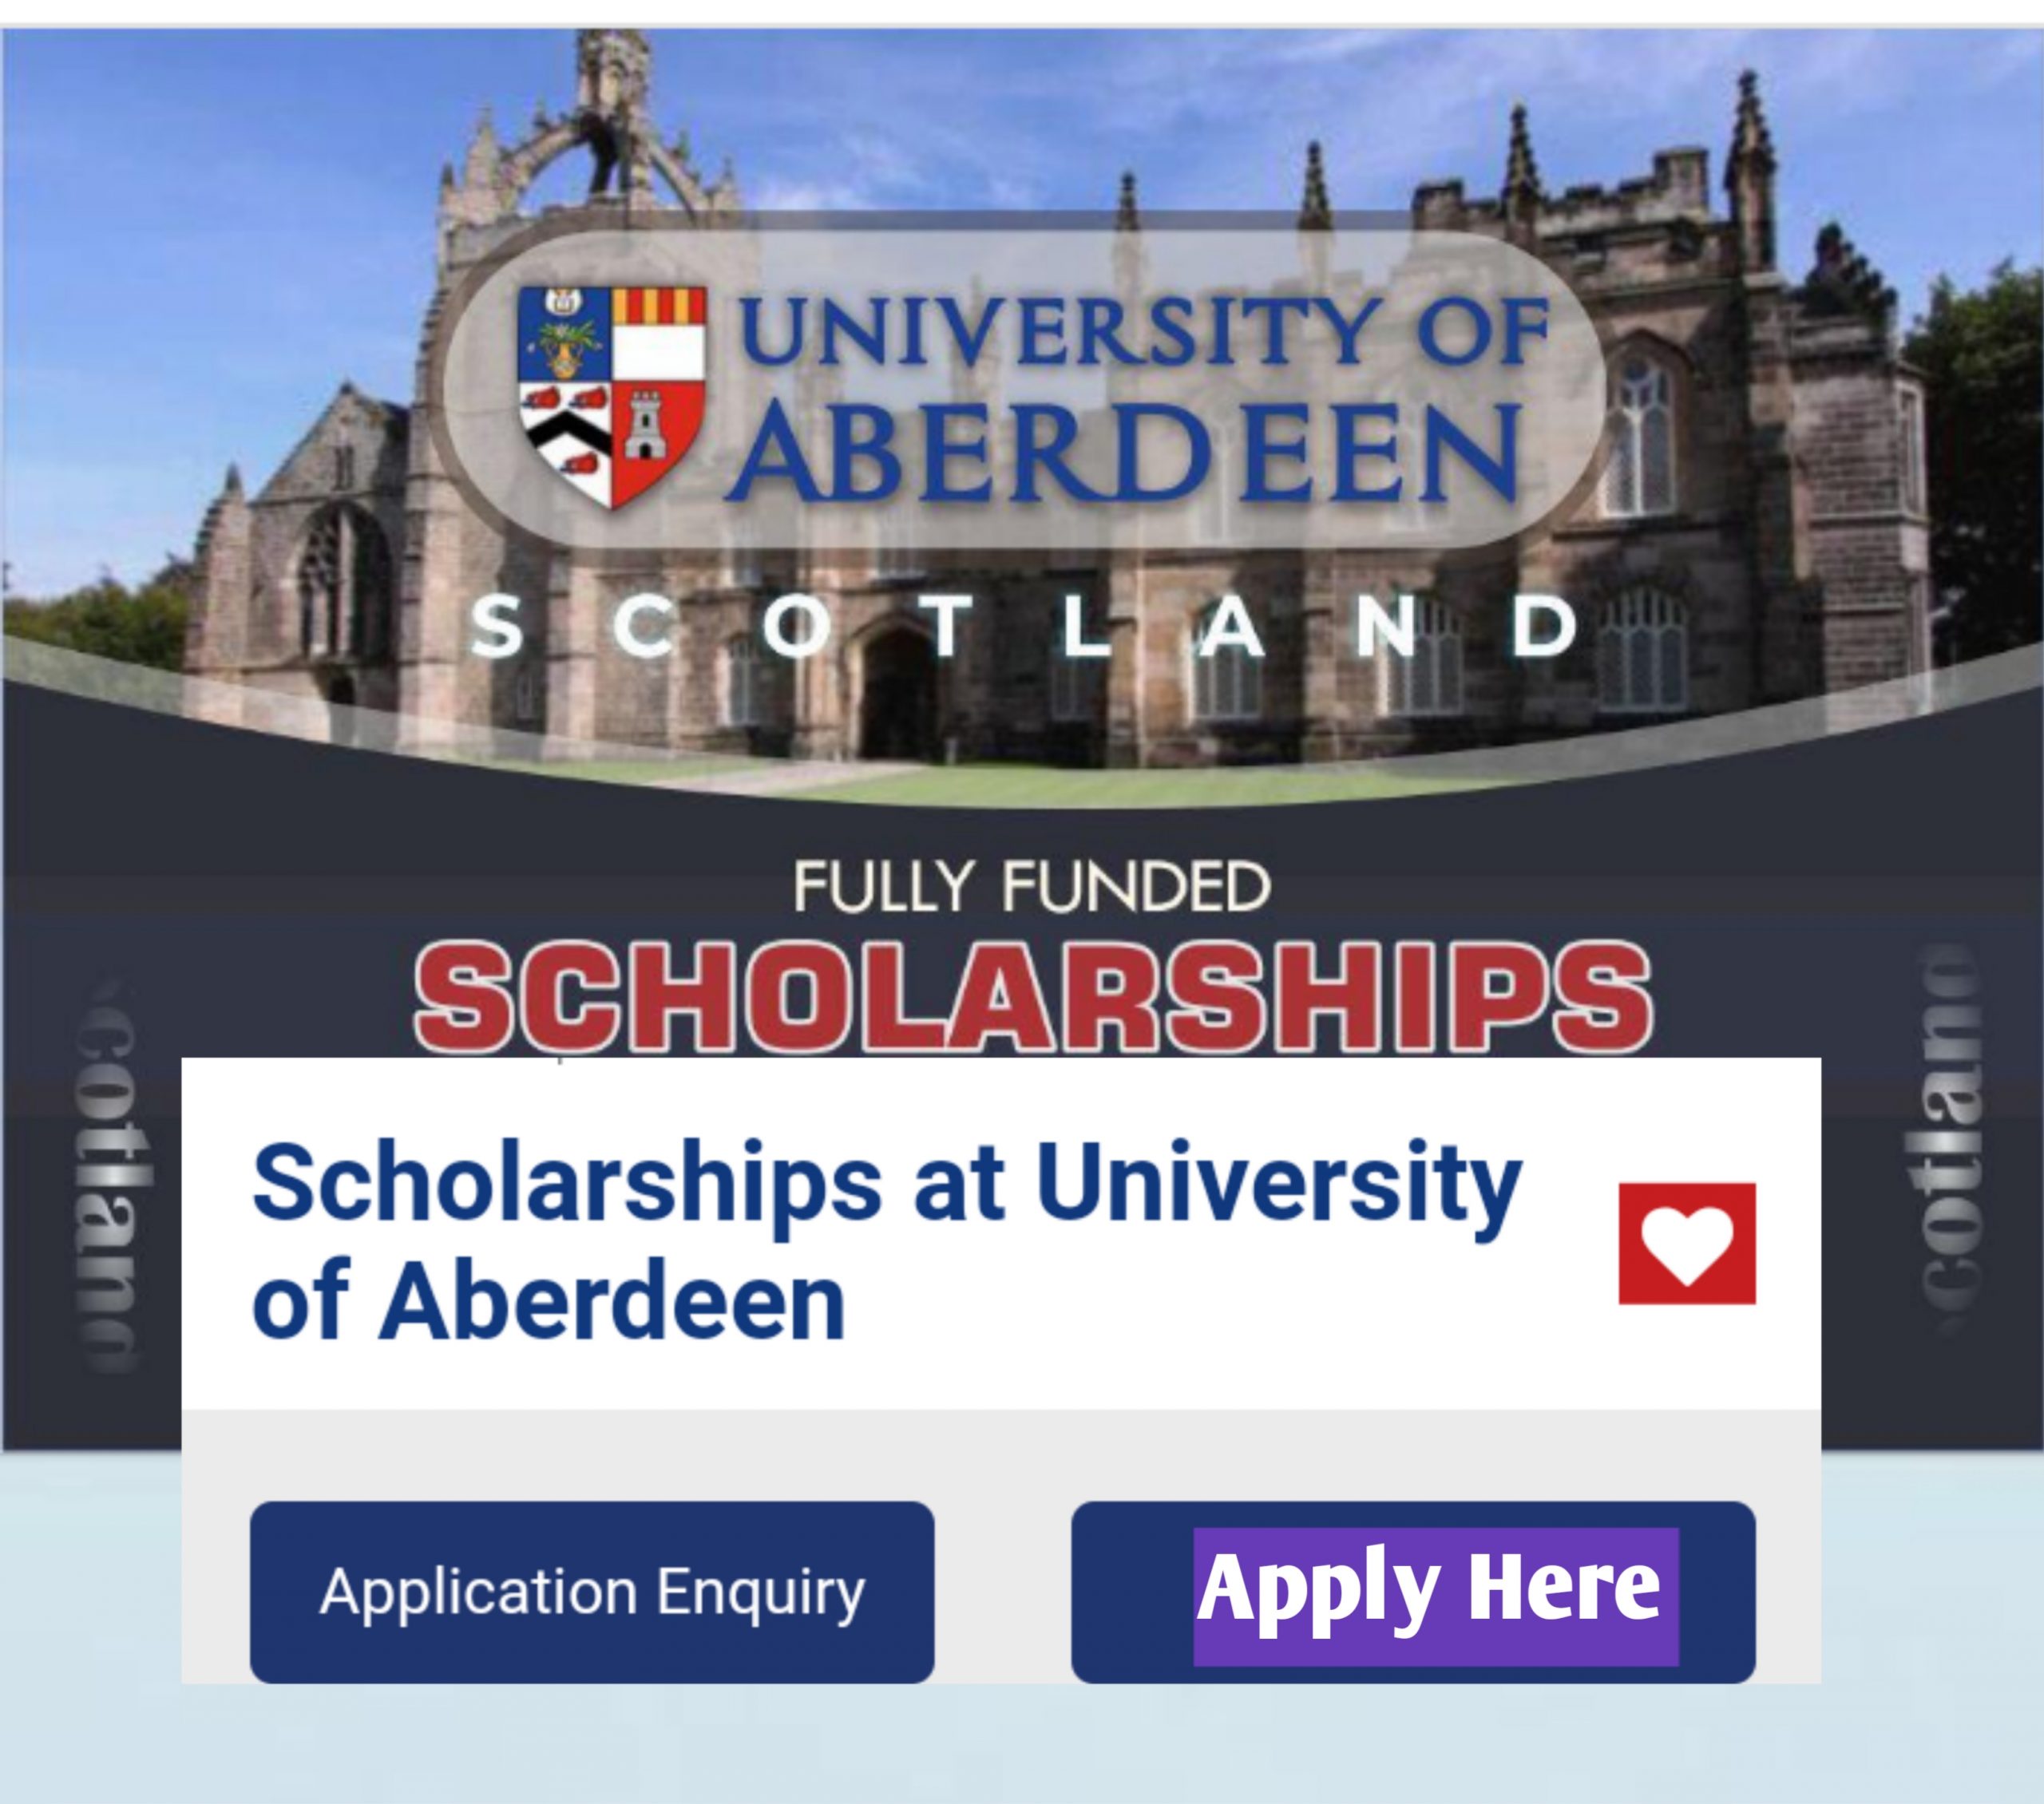 20221011 153131 scaled - The University of Aberdeen, Scotland Global Scholarships